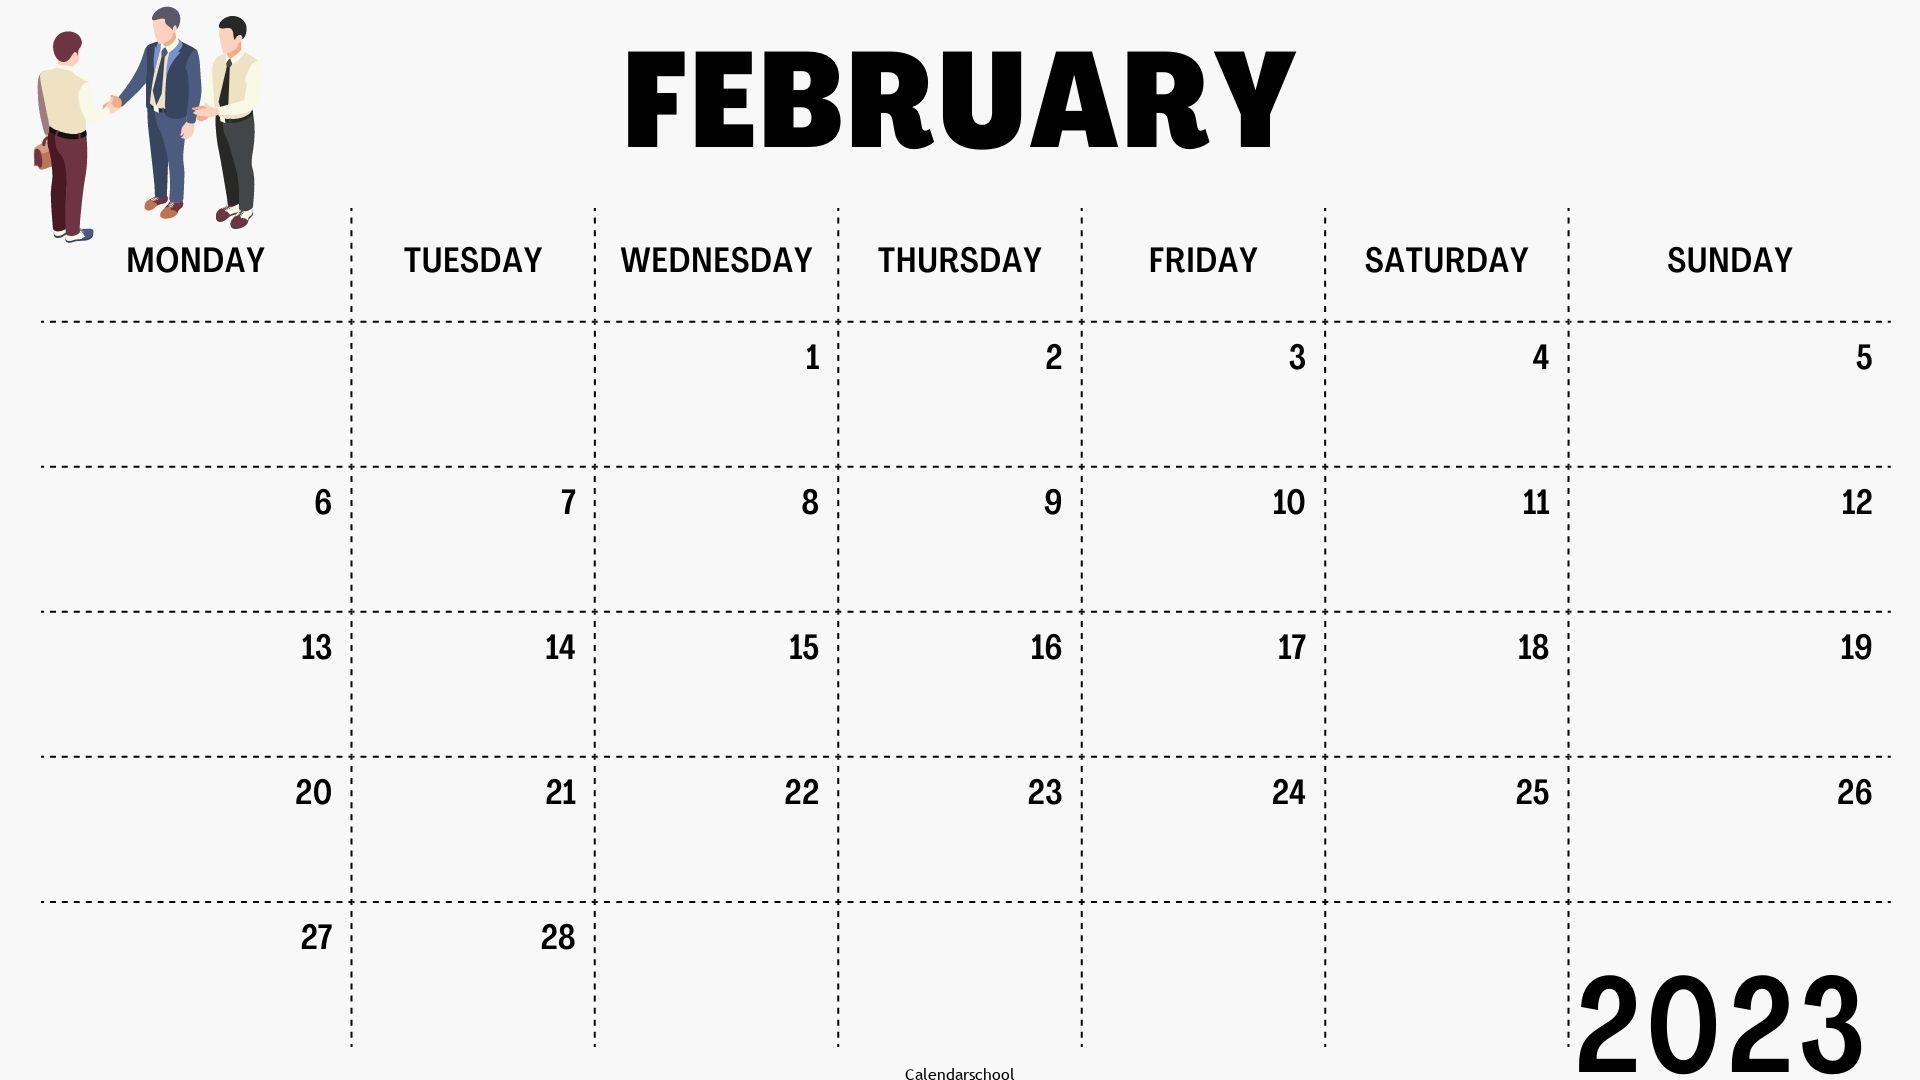 Calendar February 2023 in Excel